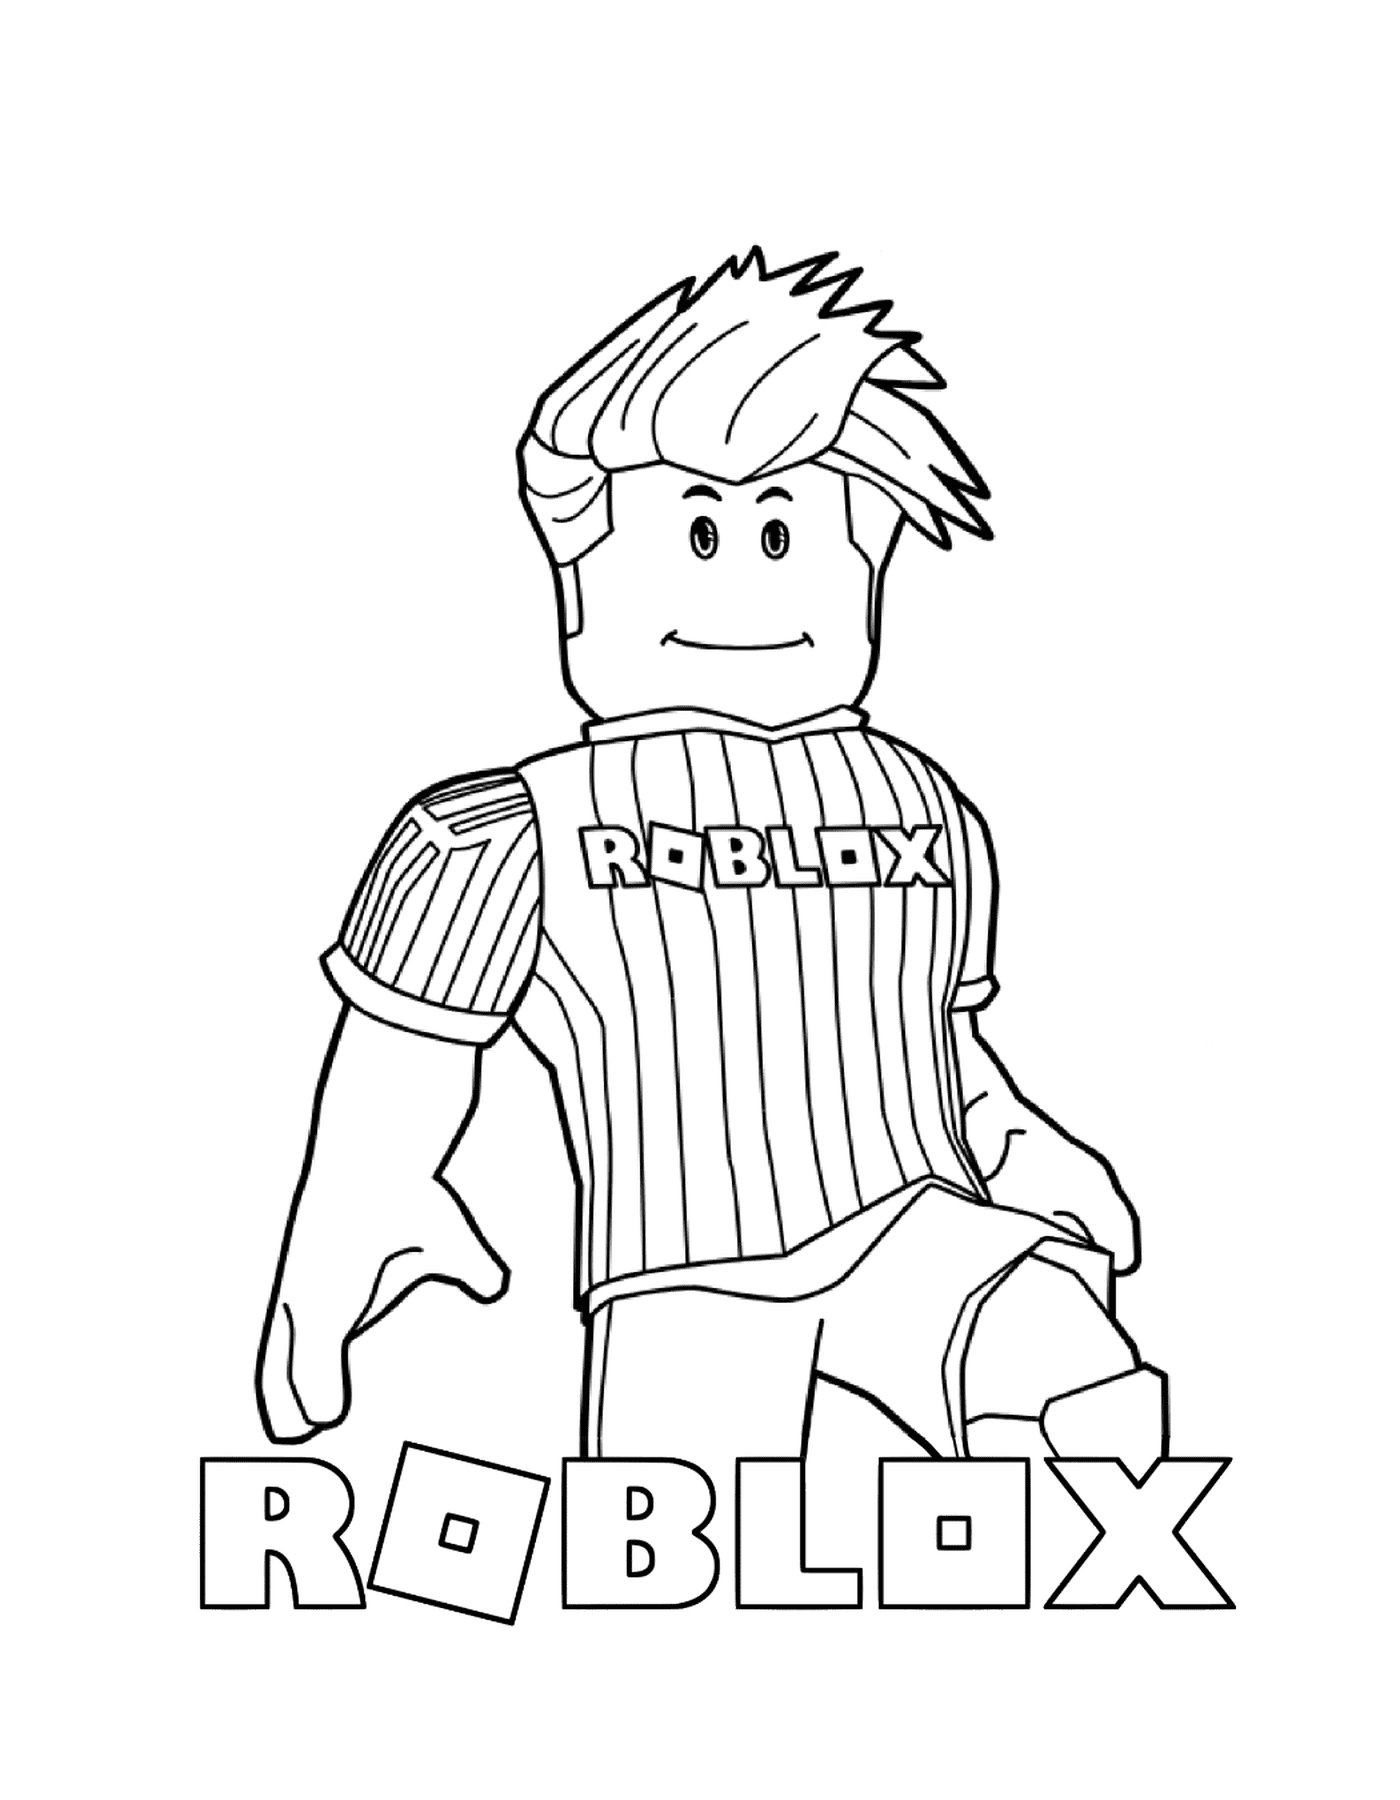  Roblox likes soccer 